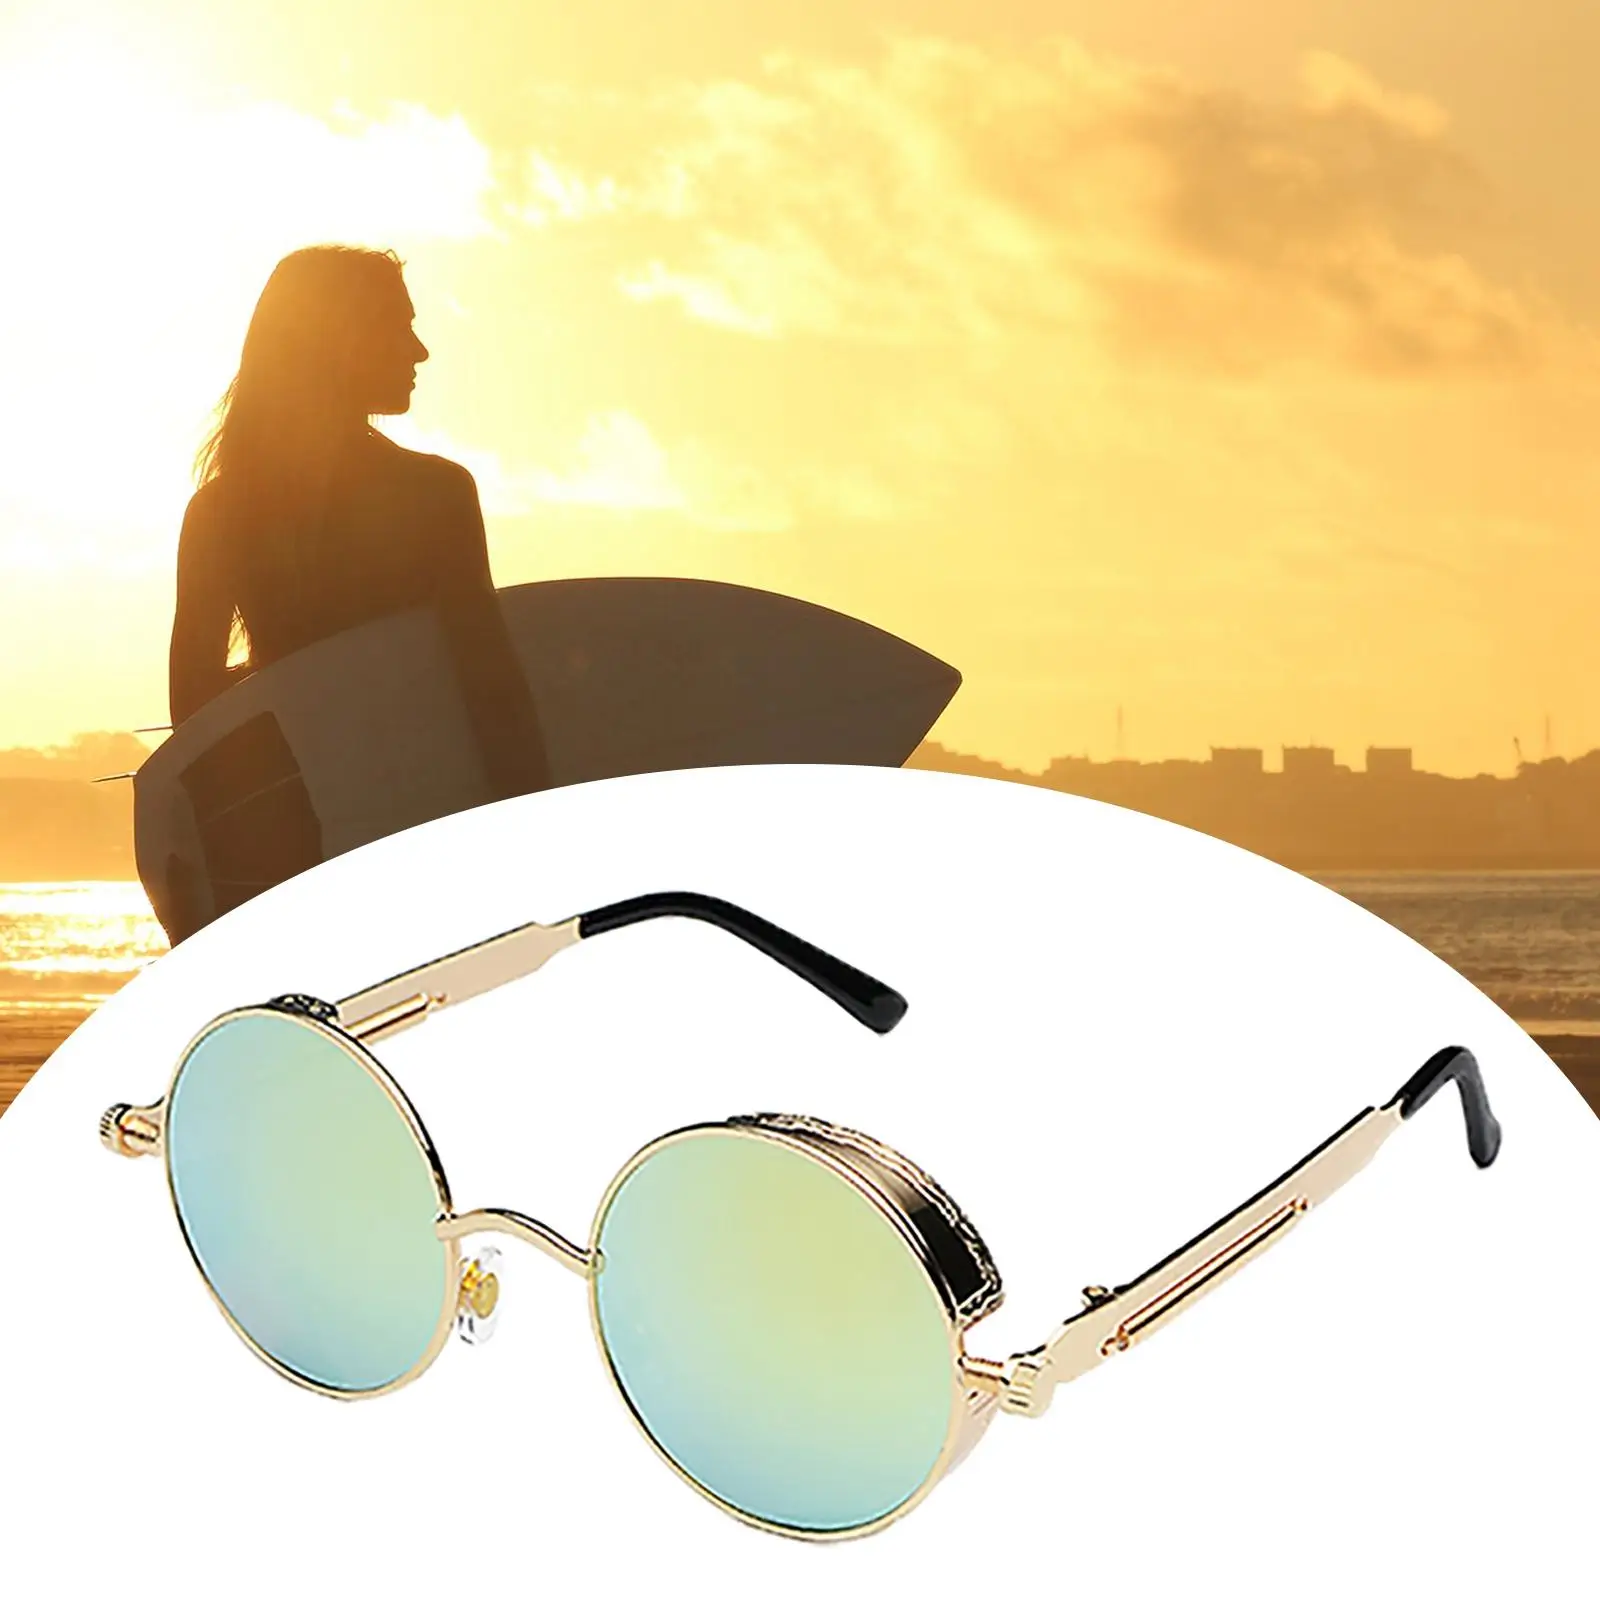 Fashion Women Men Round Sunglasses Glasses Metal Frame Anti UV Shades Tinted Lens Eyewear for Outdoor Sports Beach Fishing